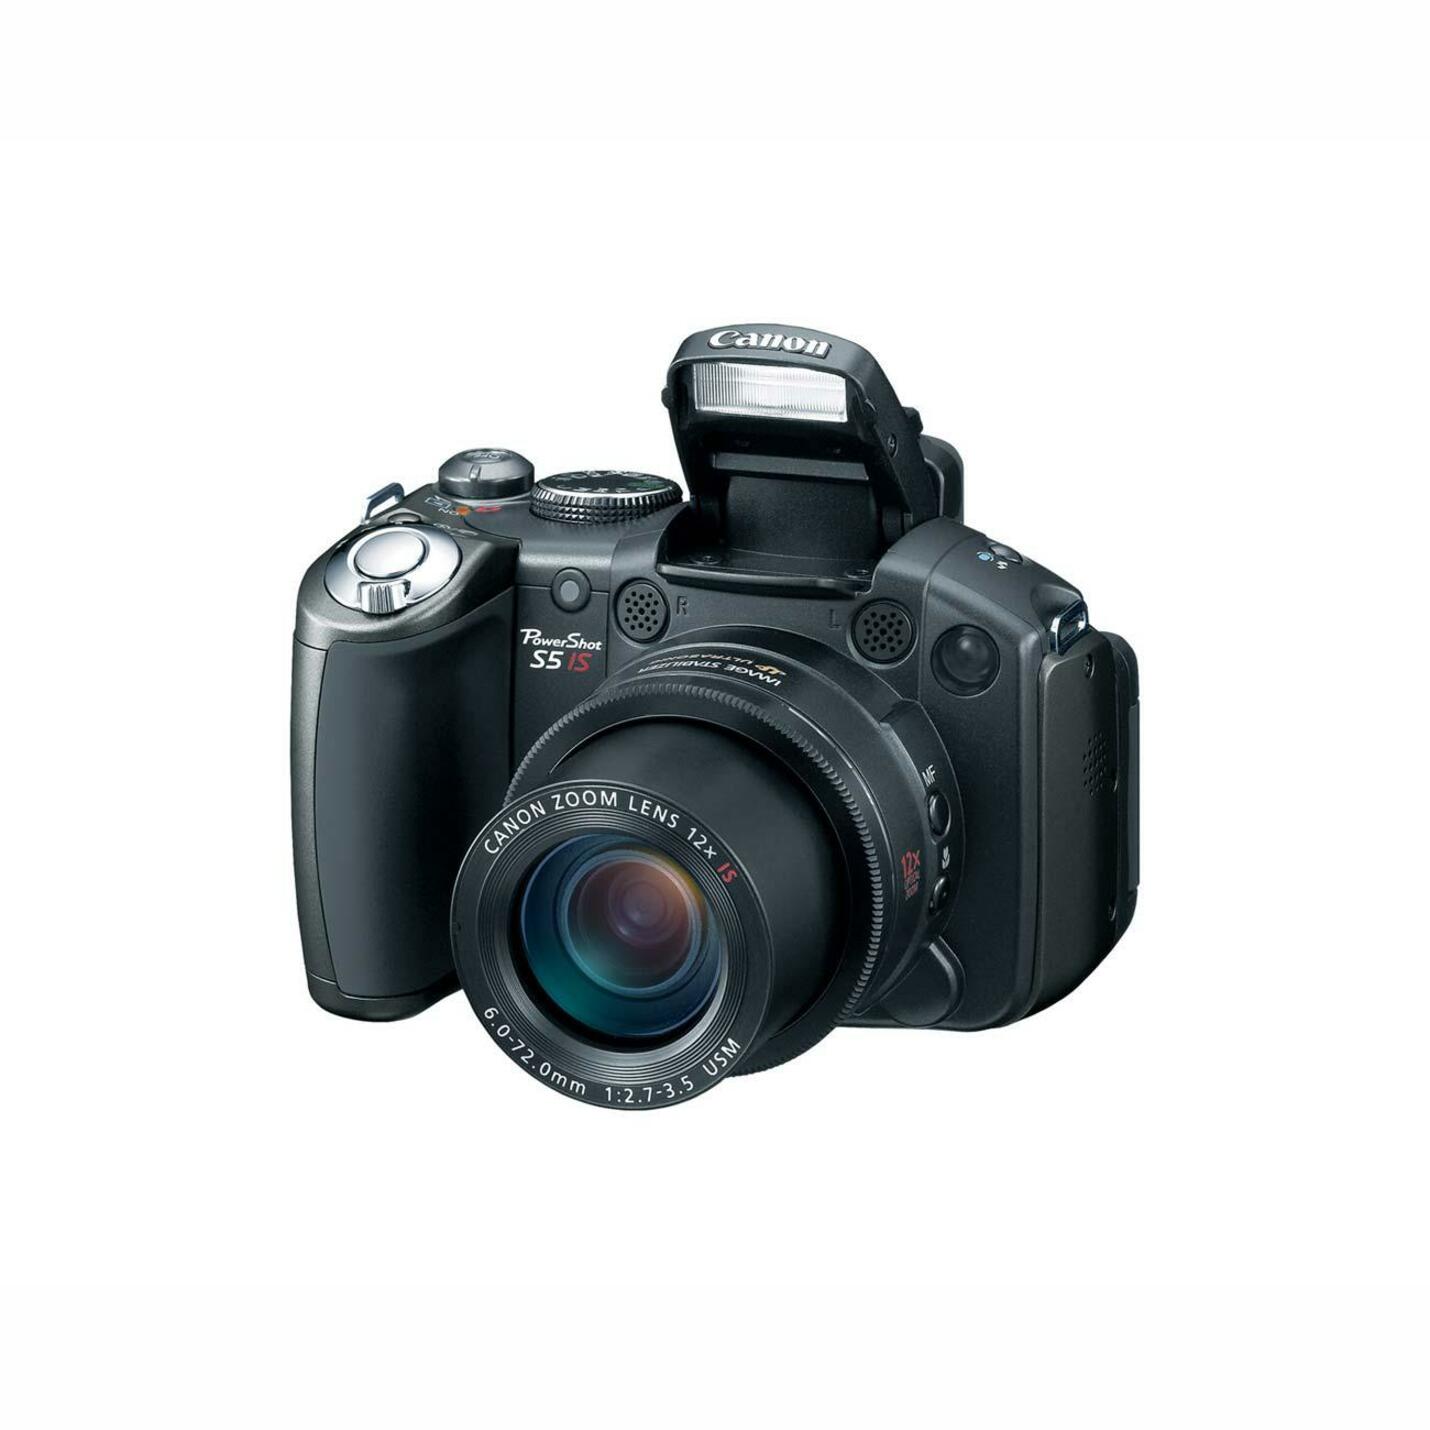 Canon PowerShot S5 IS 8 Megapixel Bridge Camera - image 1 of 5